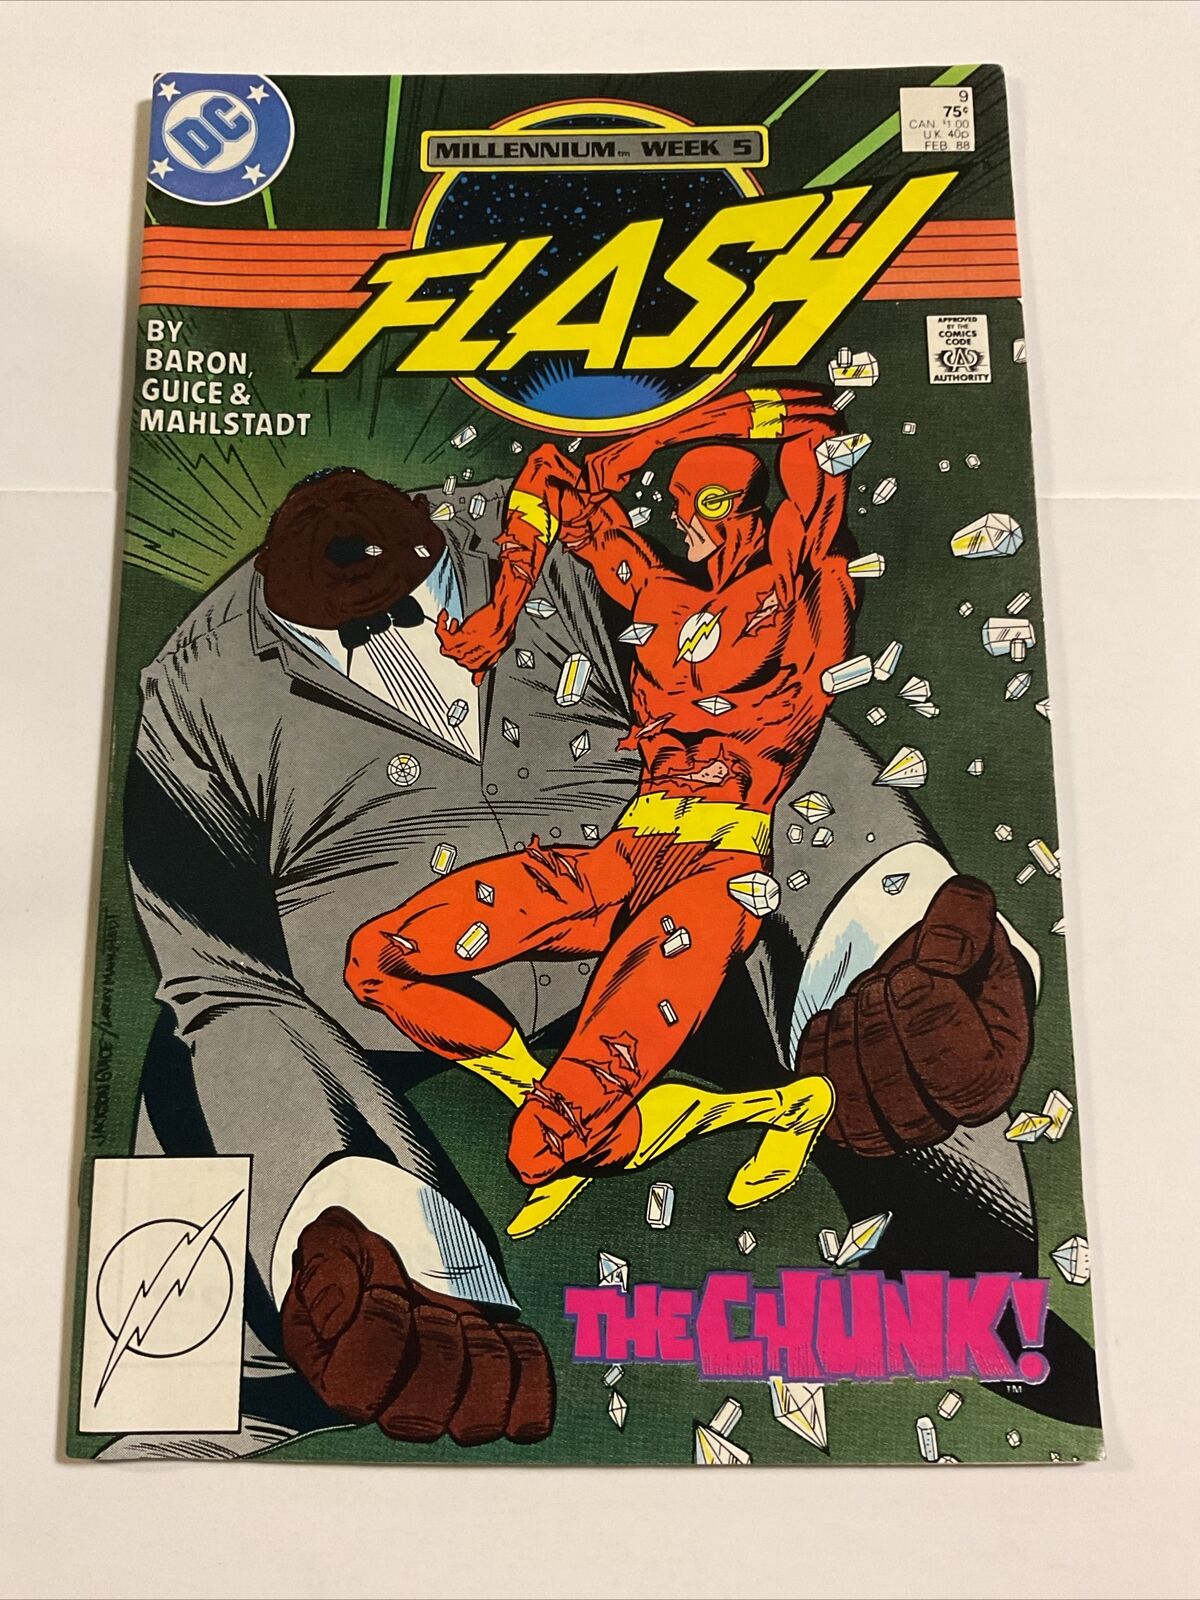 Vintage The Flash #9 NM-M 1988 DC HIGH GRADE Millennium Week 5 The Chunk